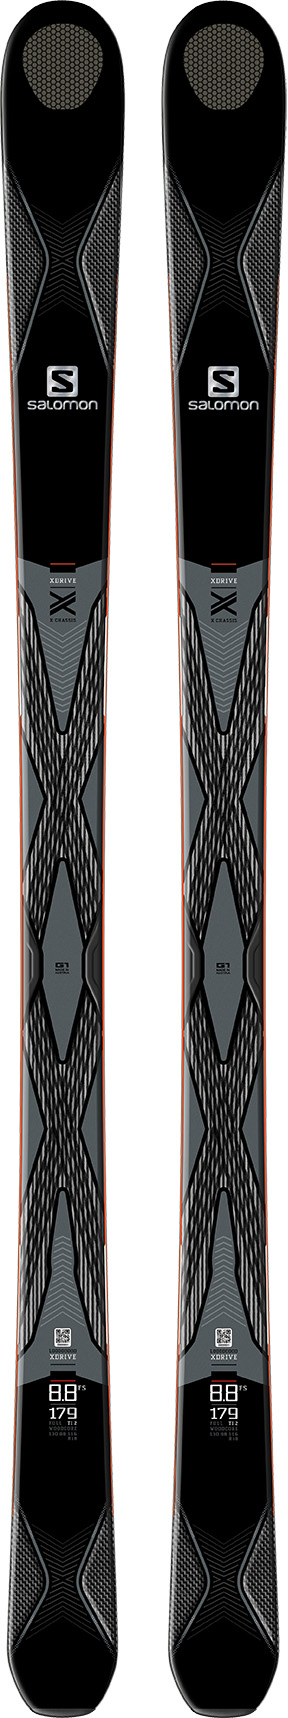 Salomon X-Drive 8.8 Demo Skis 179 cm Used 